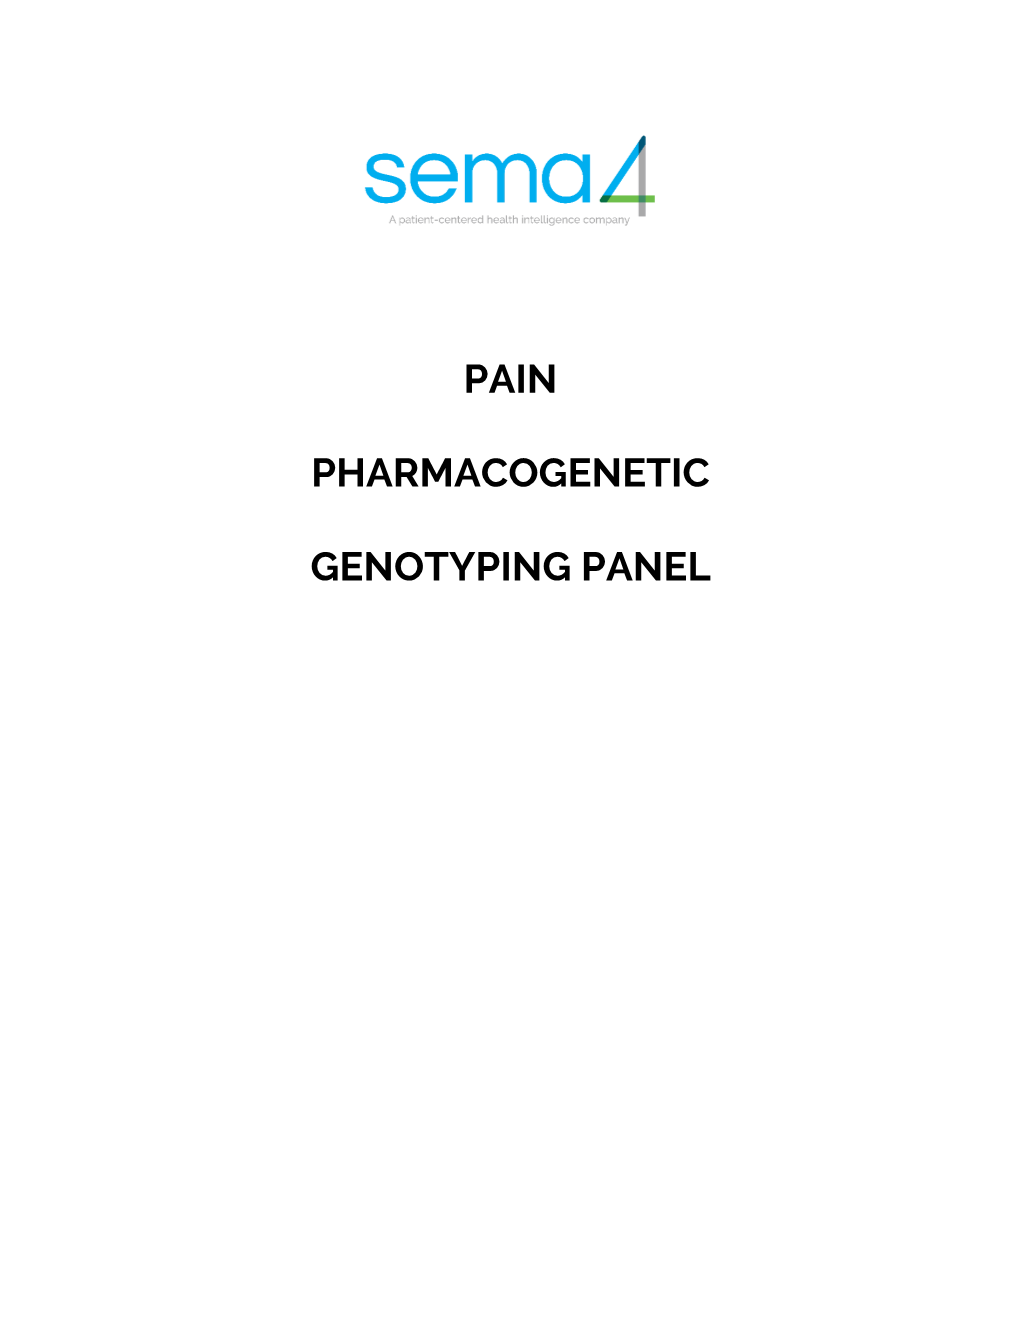 Pain Pharmacogenetic Genotyping Panel